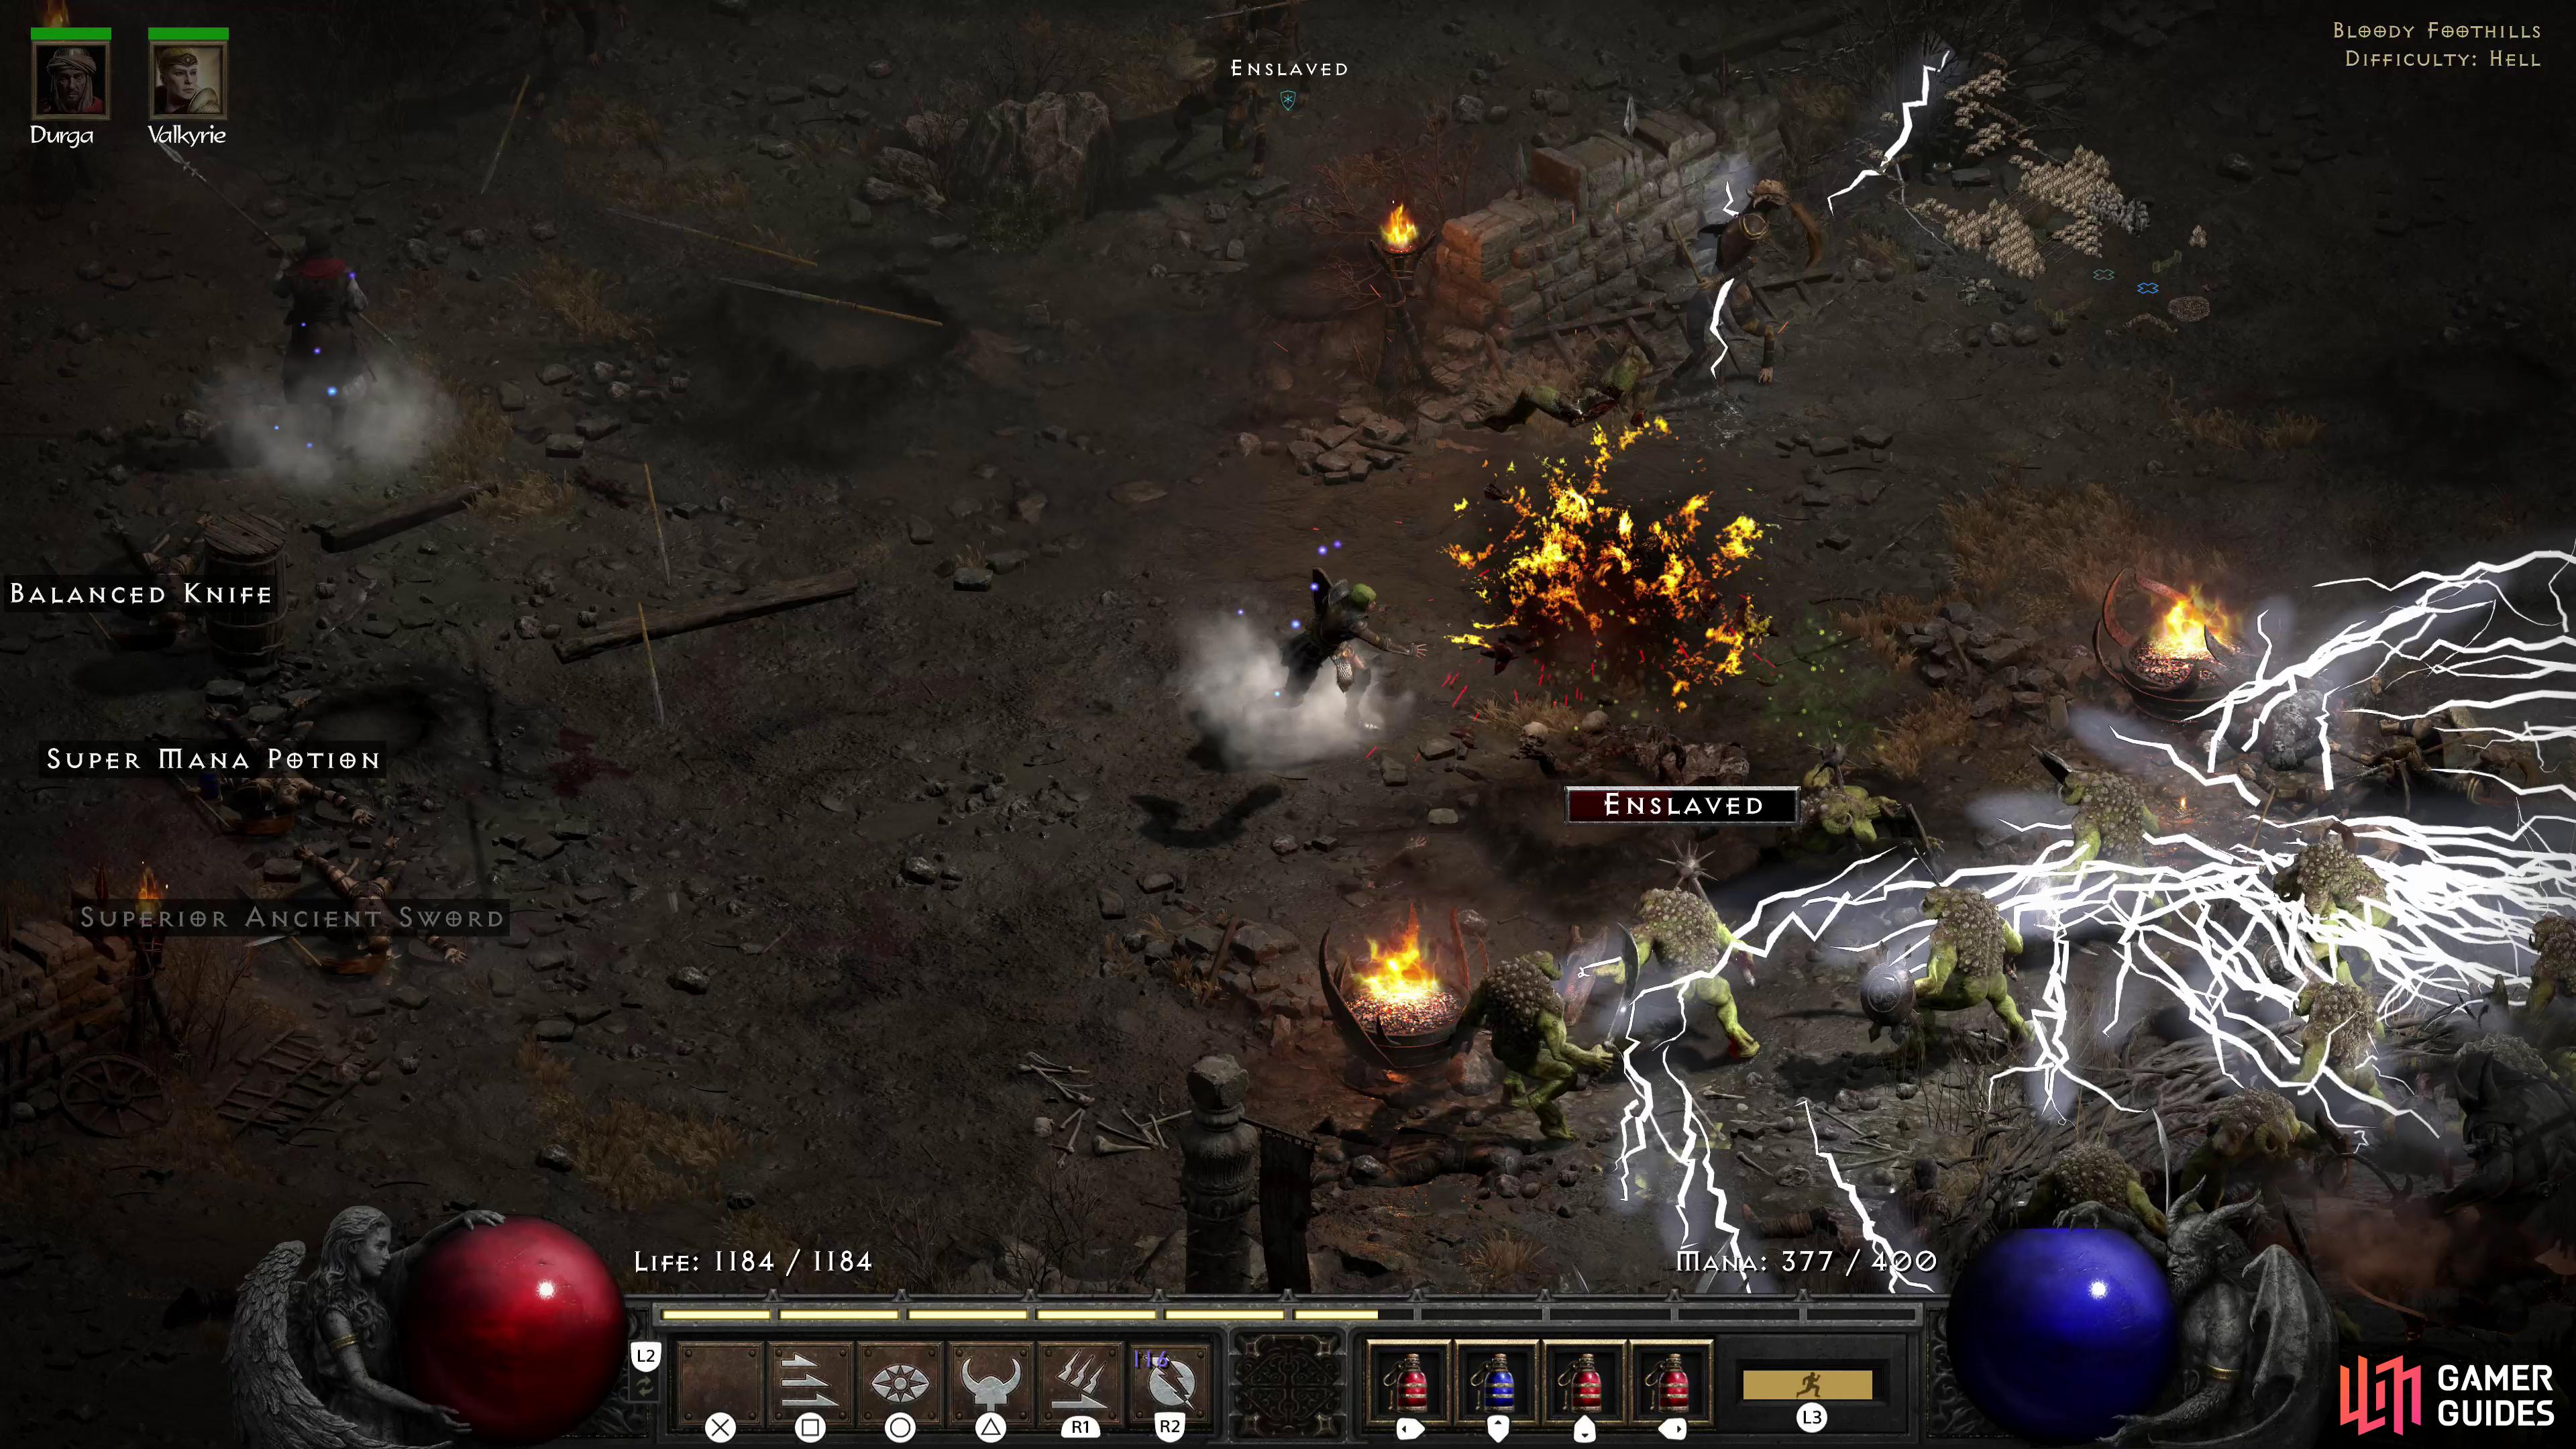 Lightning Fury can decimate entire hordes of enemies.